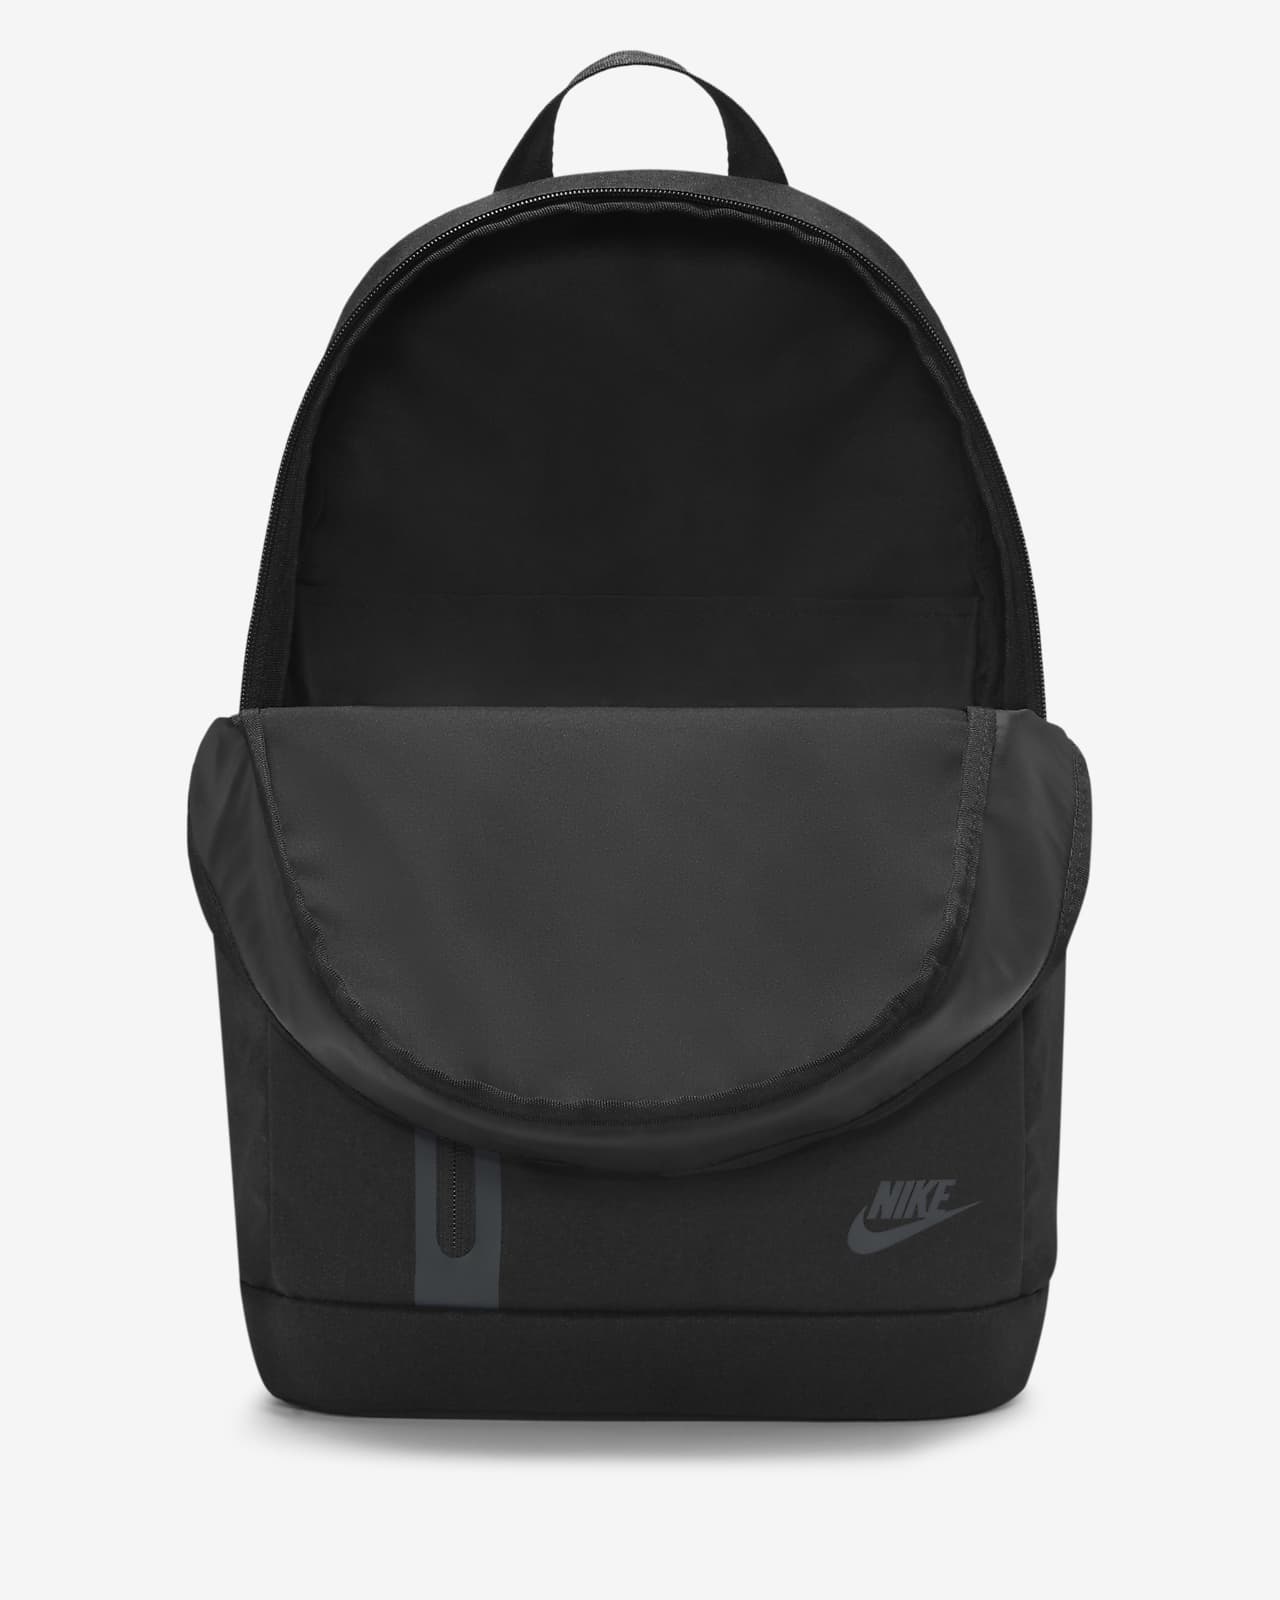 Nike Elemental Backpack REVIEW - YouTube